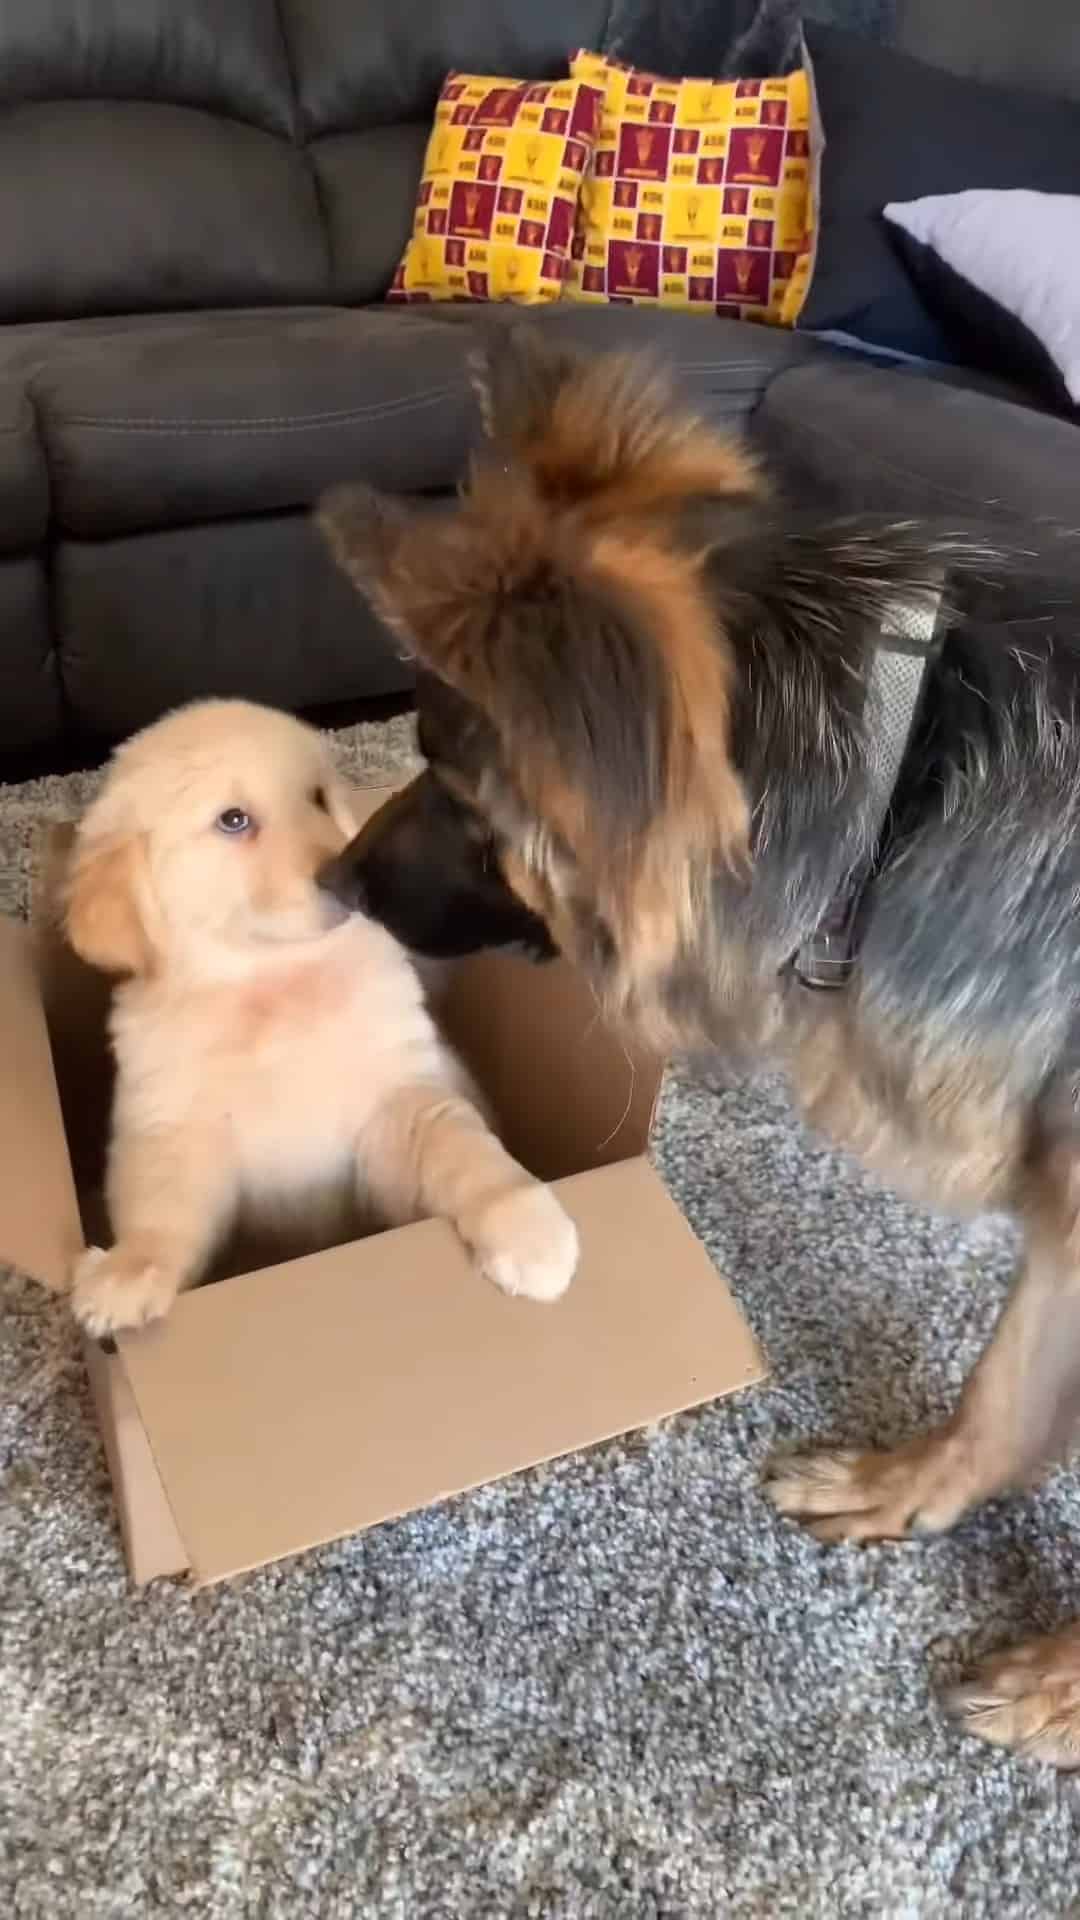 german shepherd dog sniffing golden retriever puppy in a cardboard box